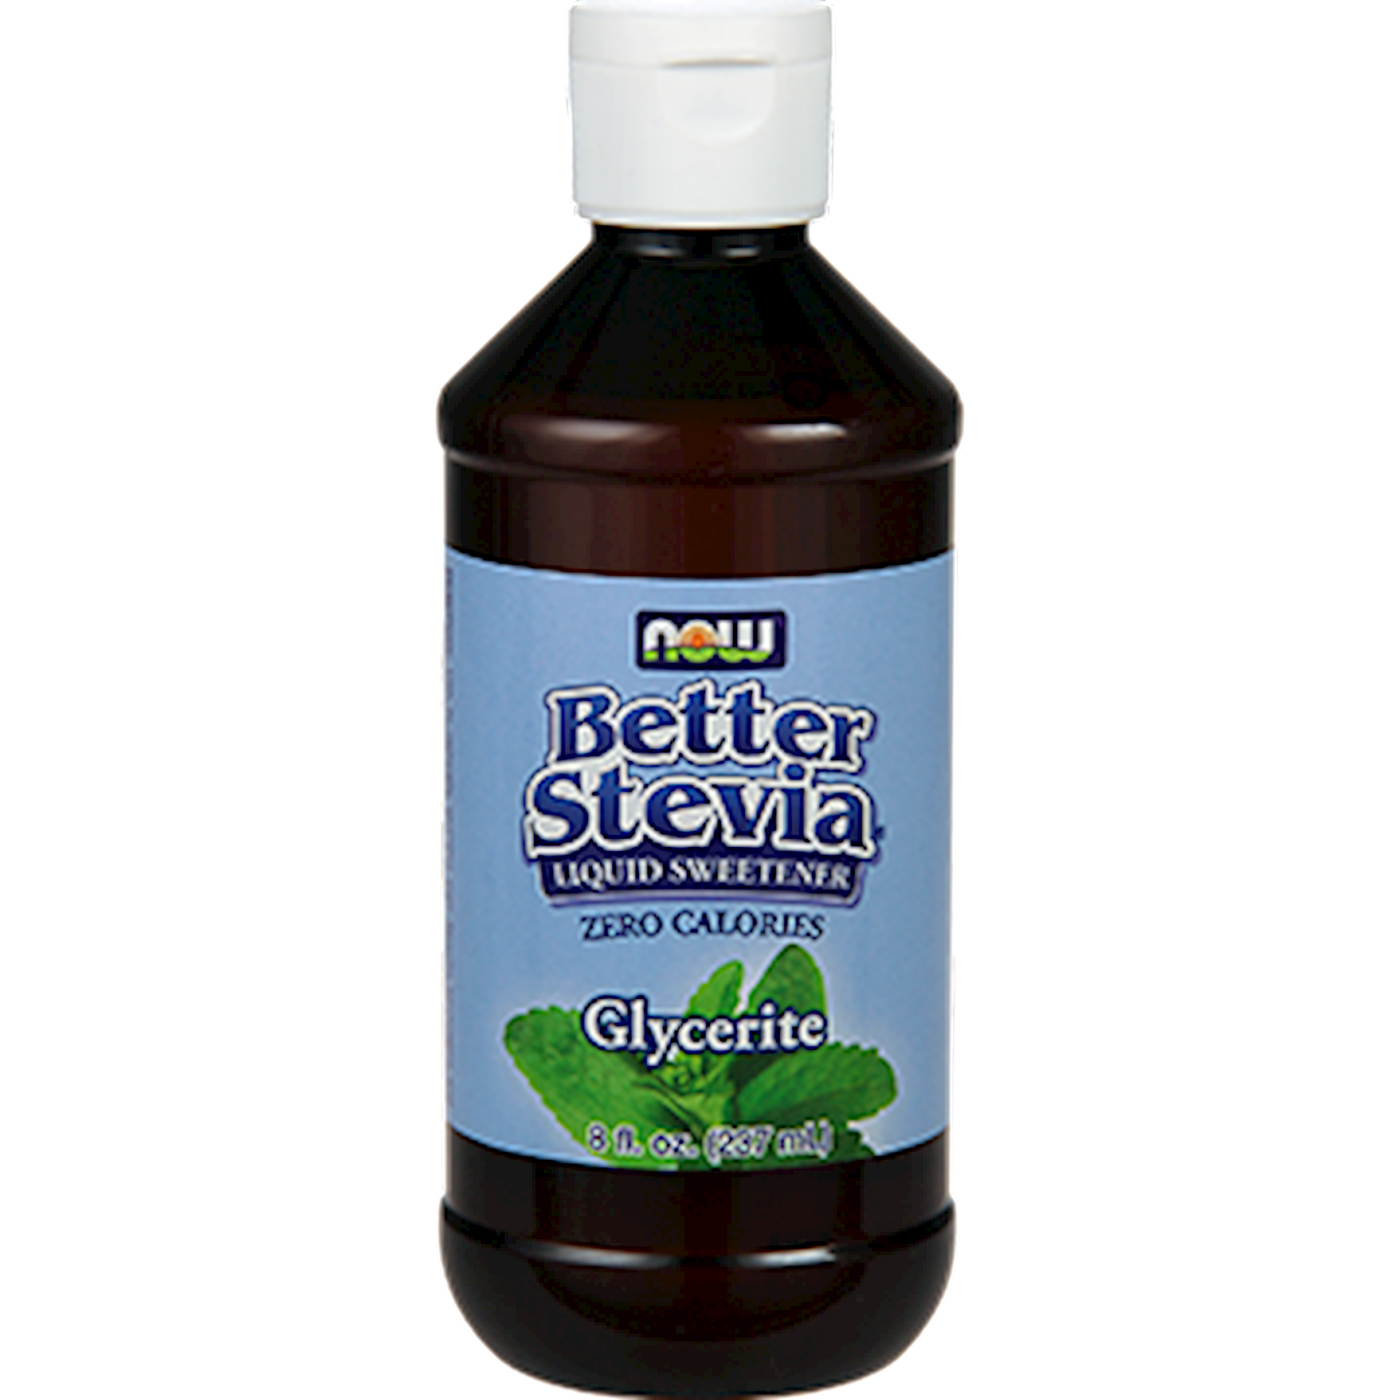 Better Stevia Glycerite 8 fl oz Curated Wellness